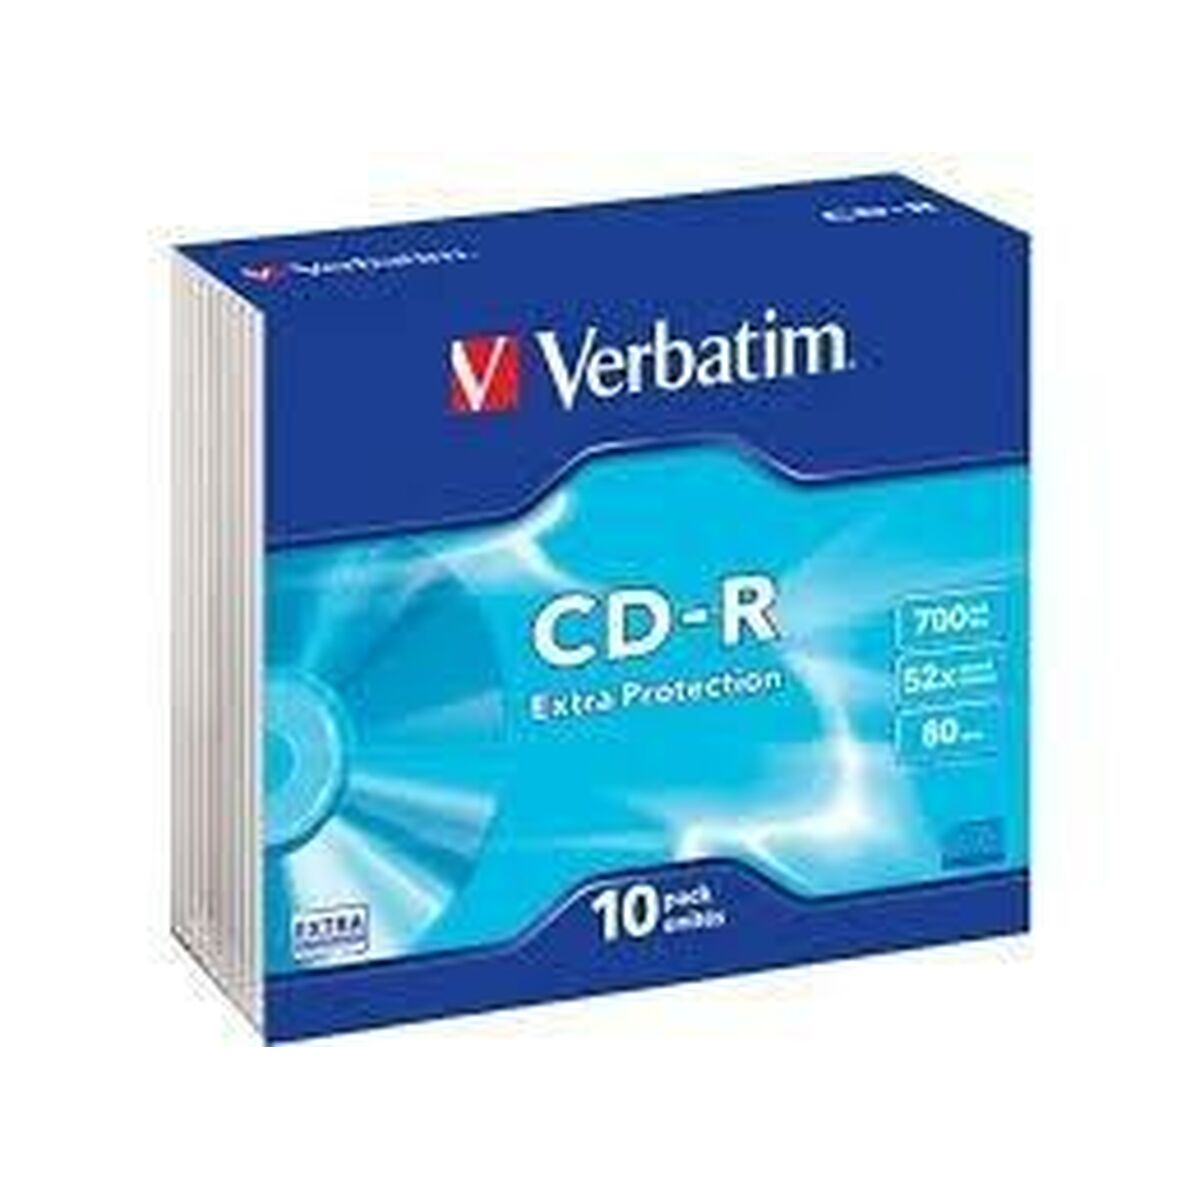 CD-R Verbatim CD-R Extra Protection 10 Unități 700 MB 52x